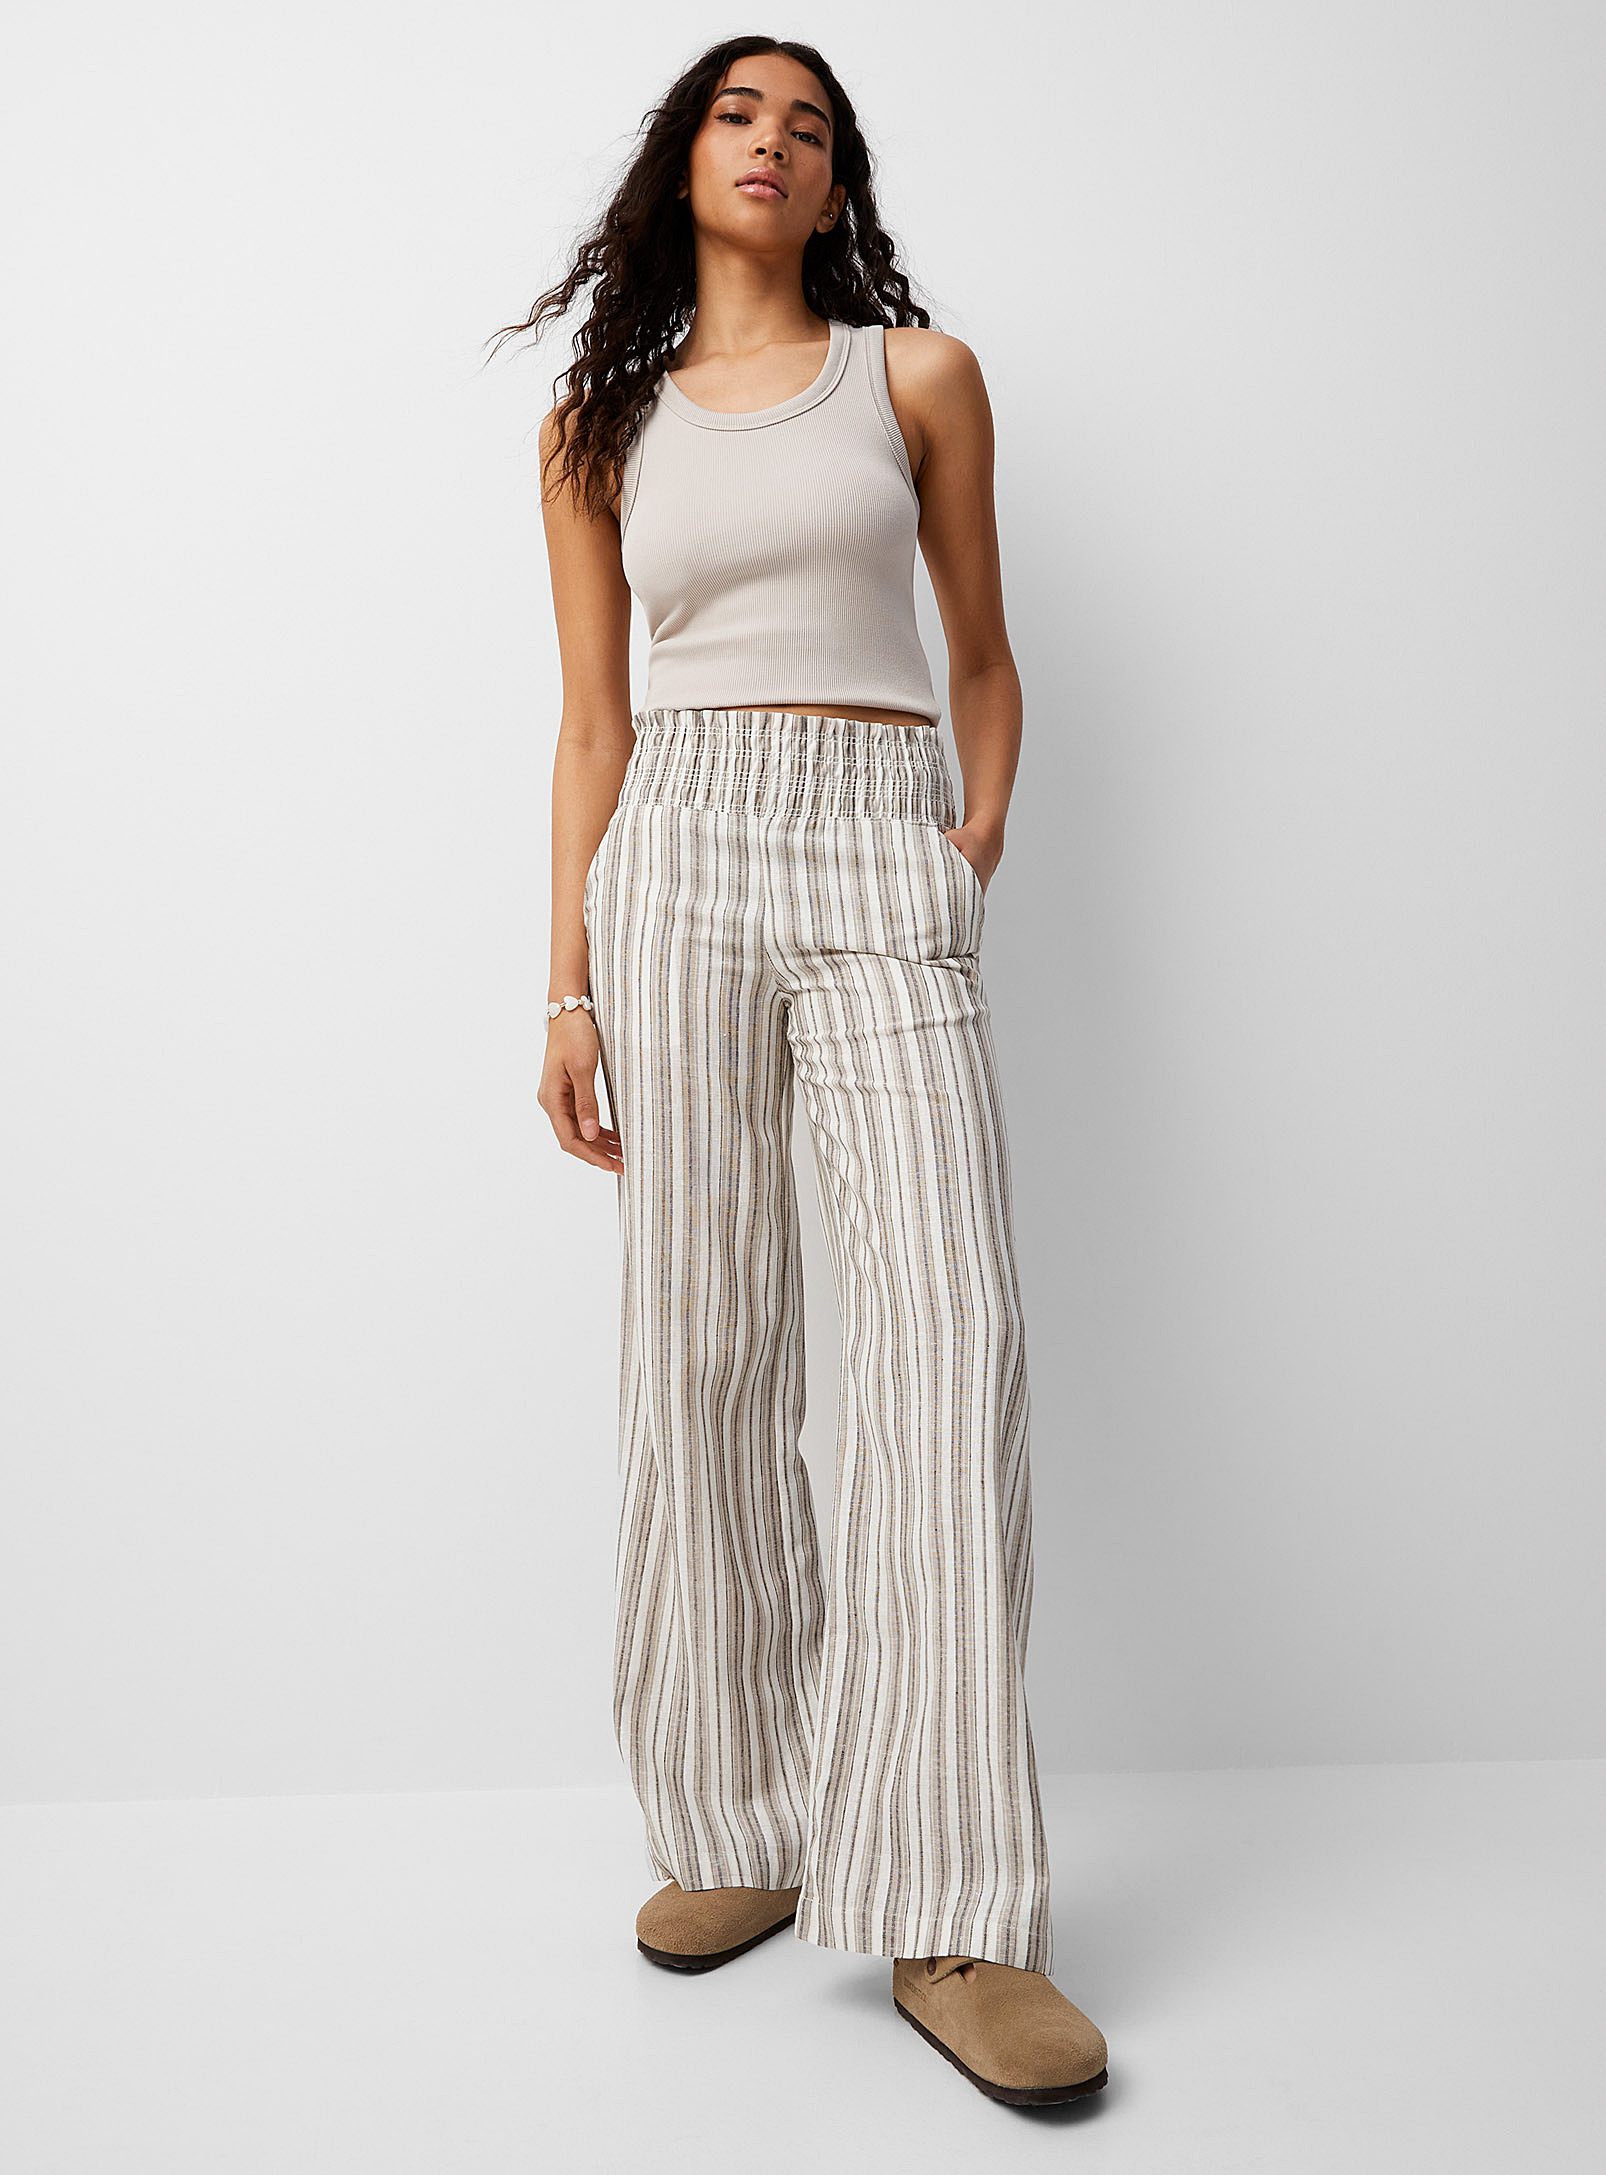 Twik - Women's Striped linen pant